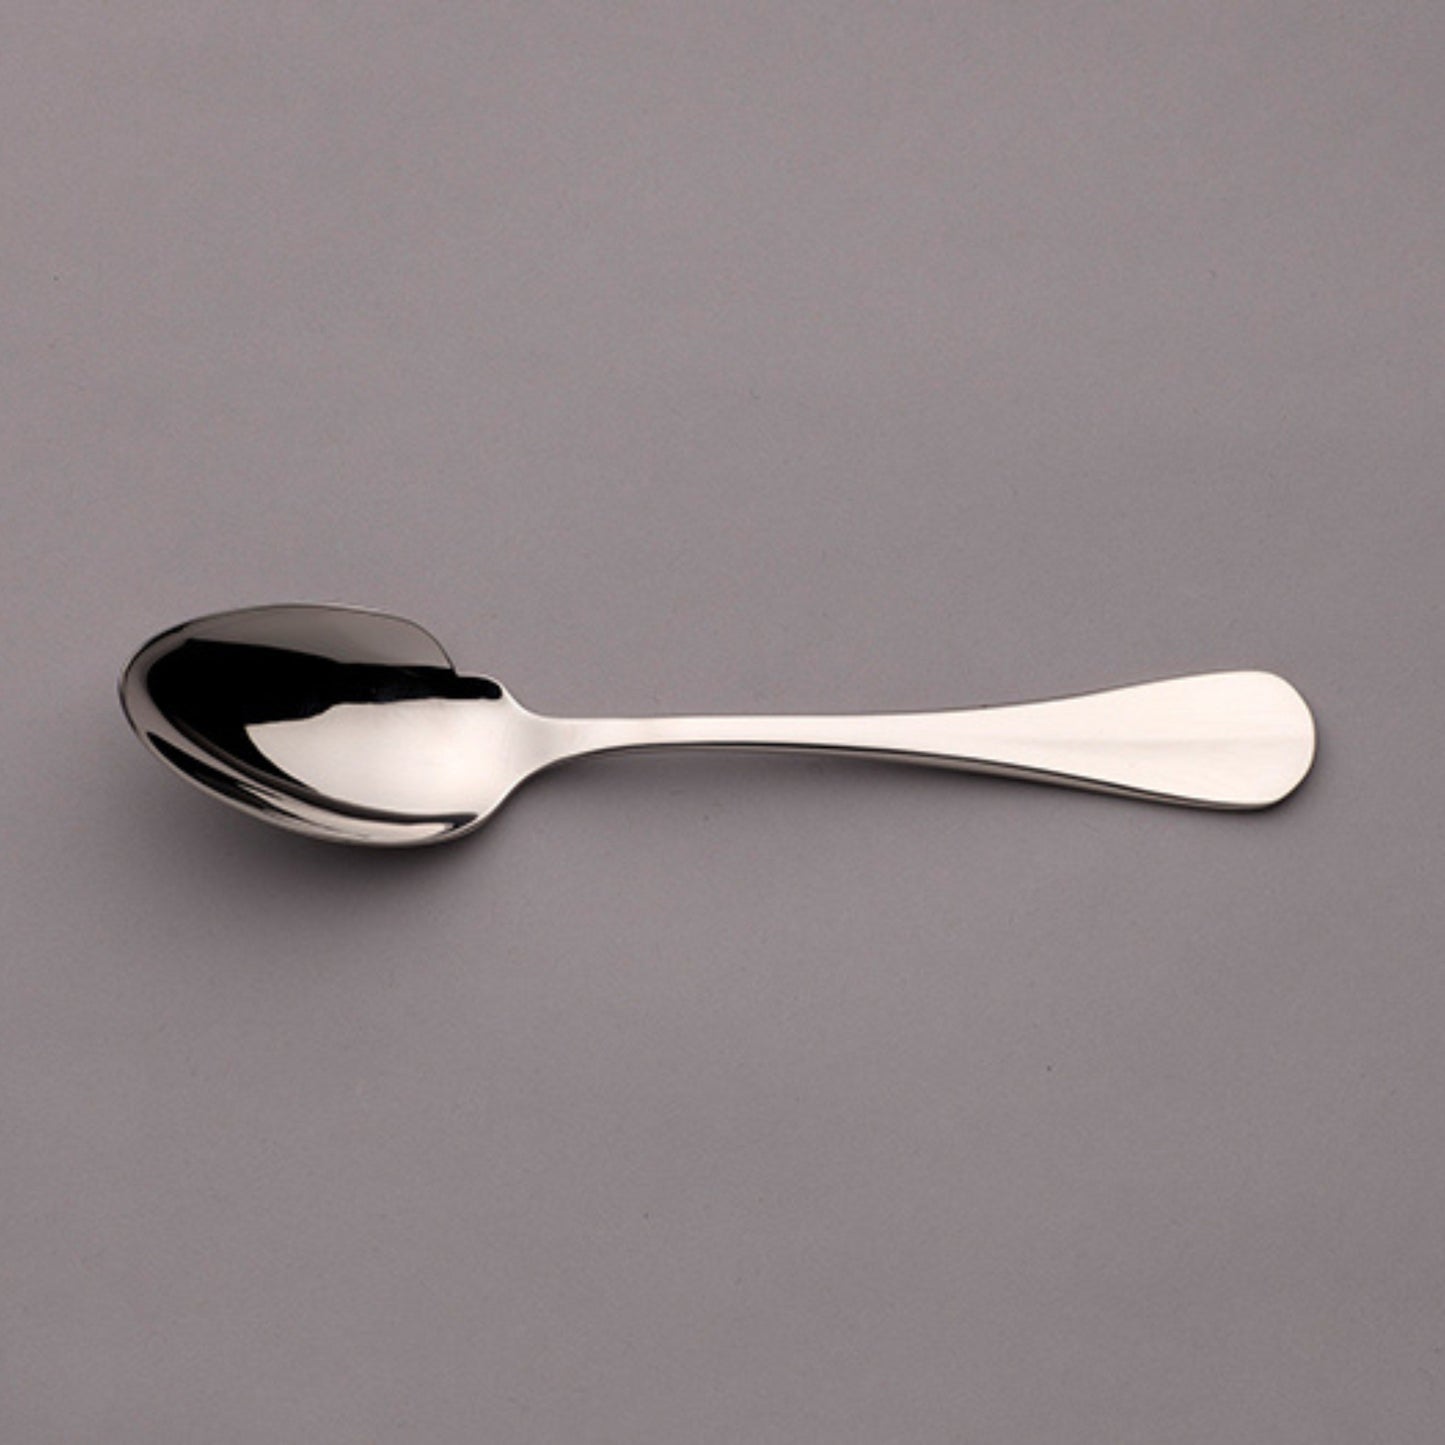 Baguette silver plated flatware cutlery